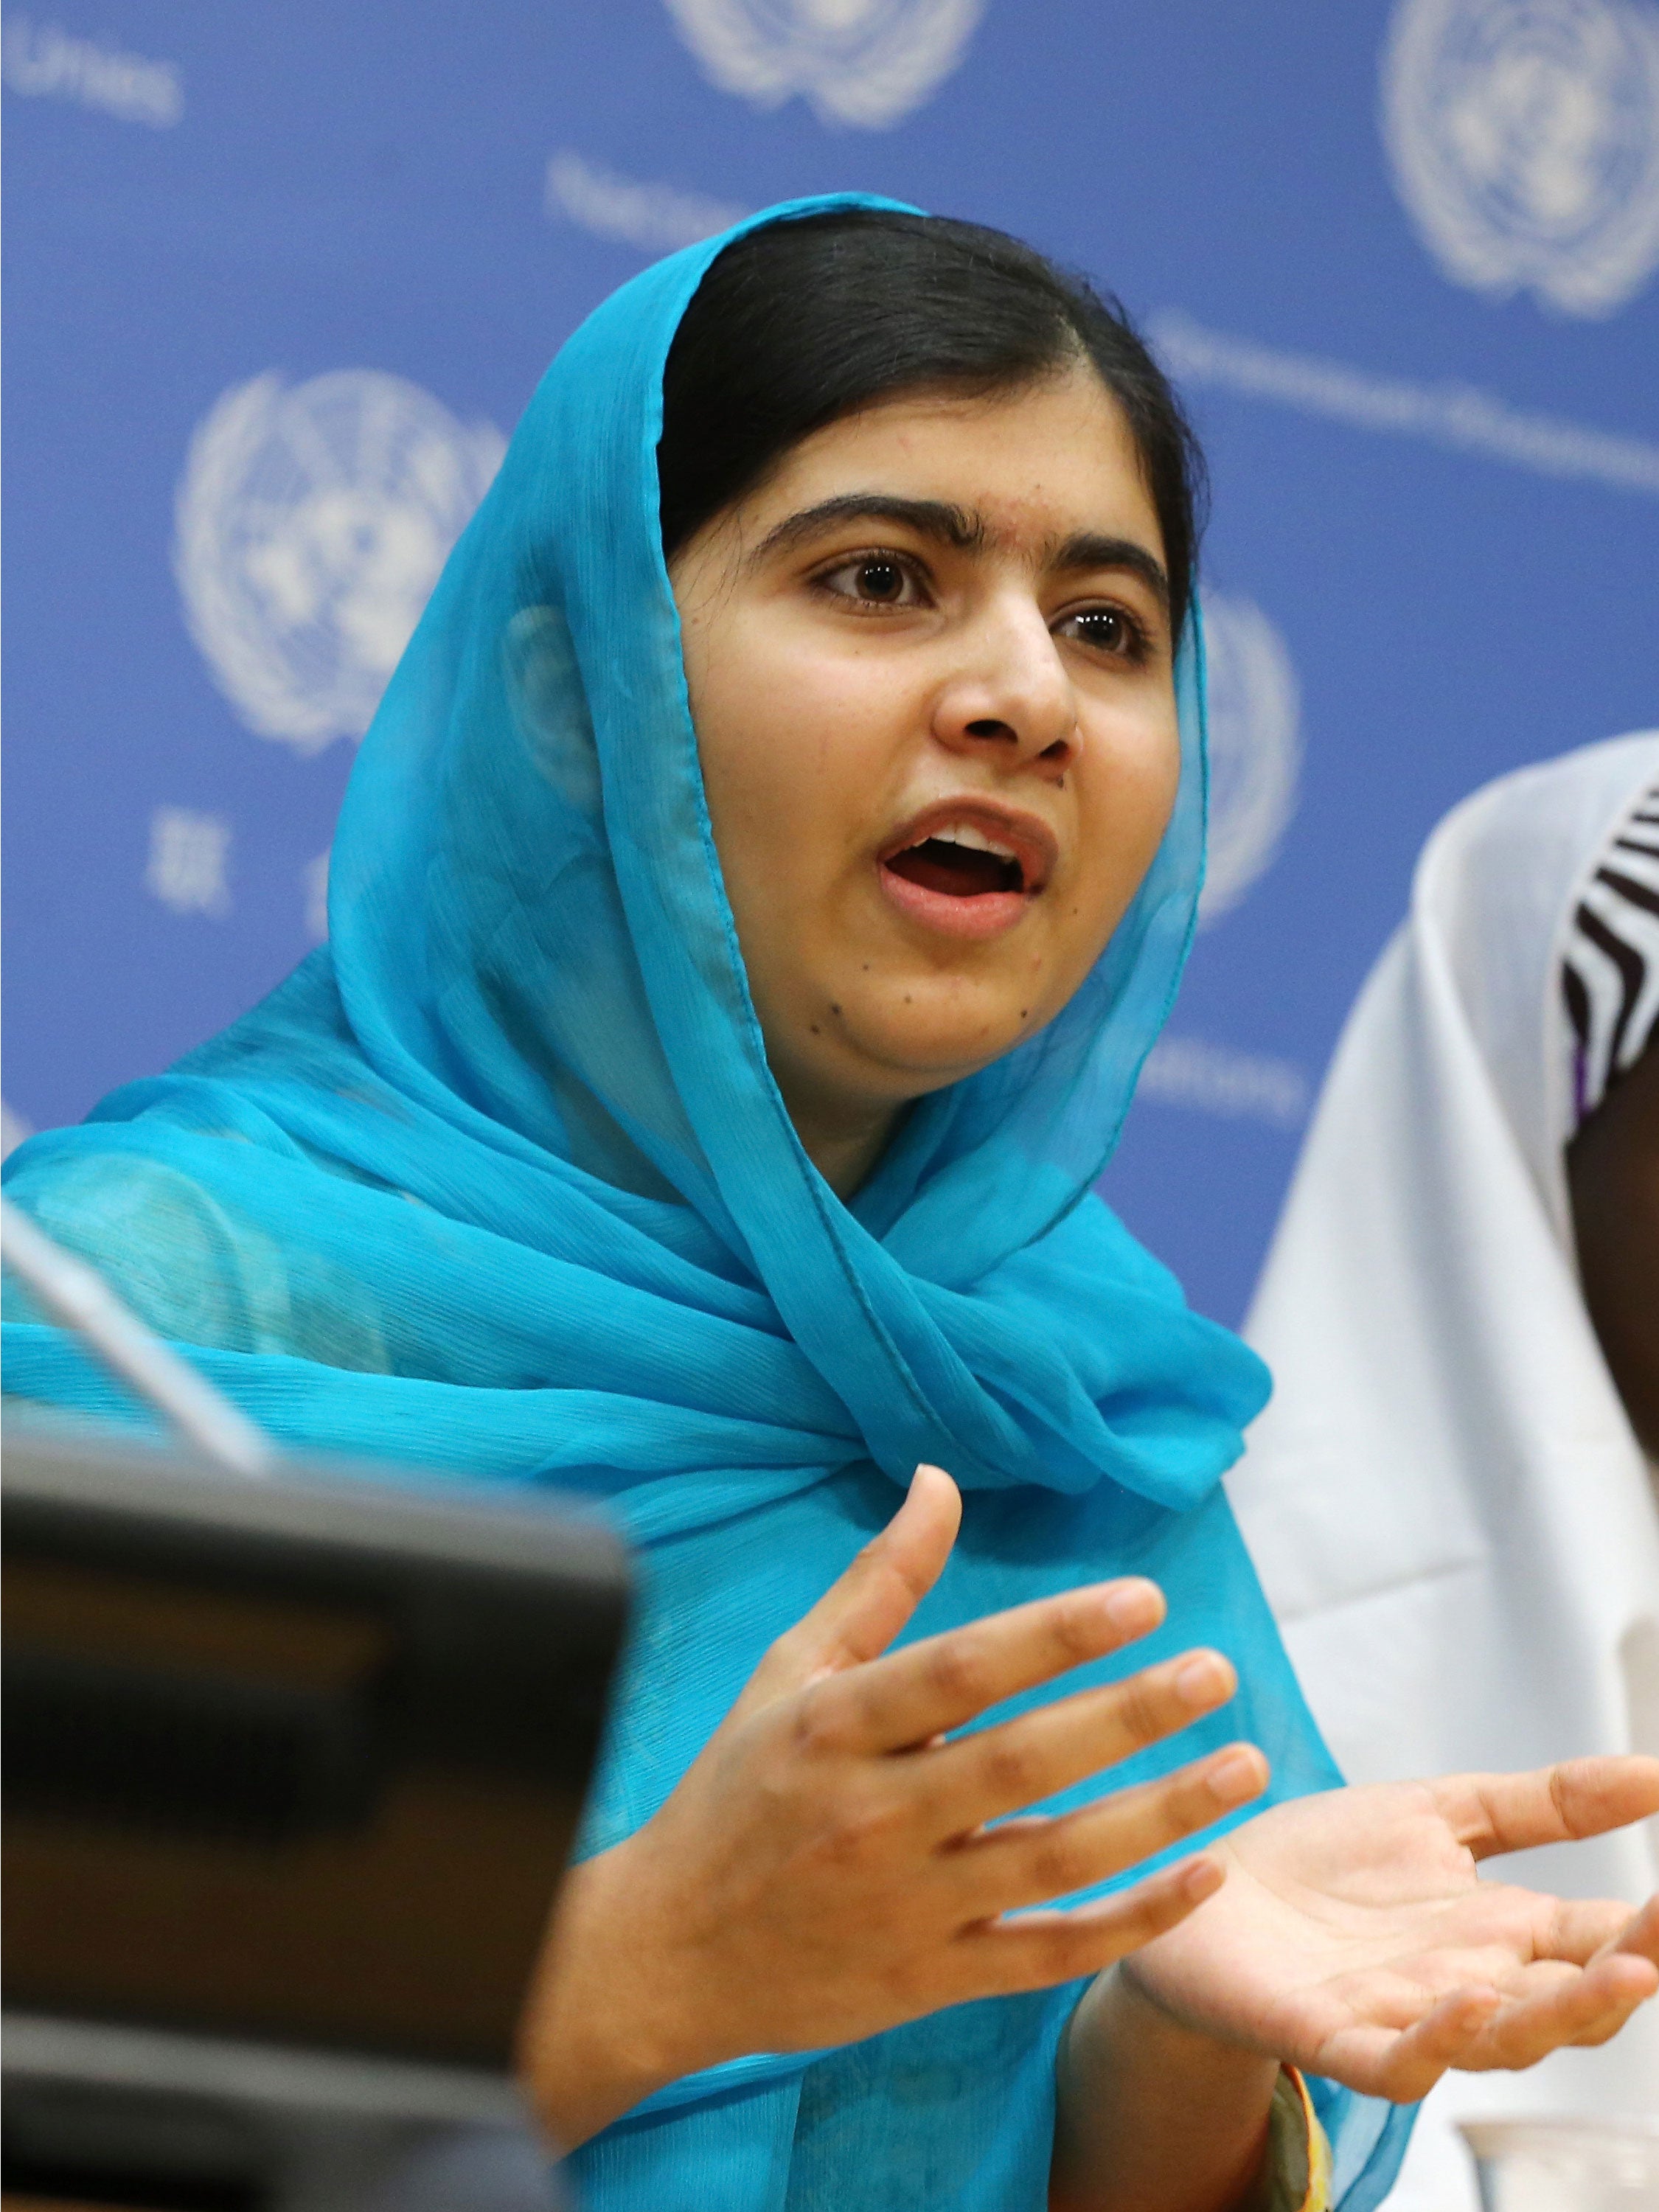 Malala Yousafzai won the Nobel Peace Prize in 2014